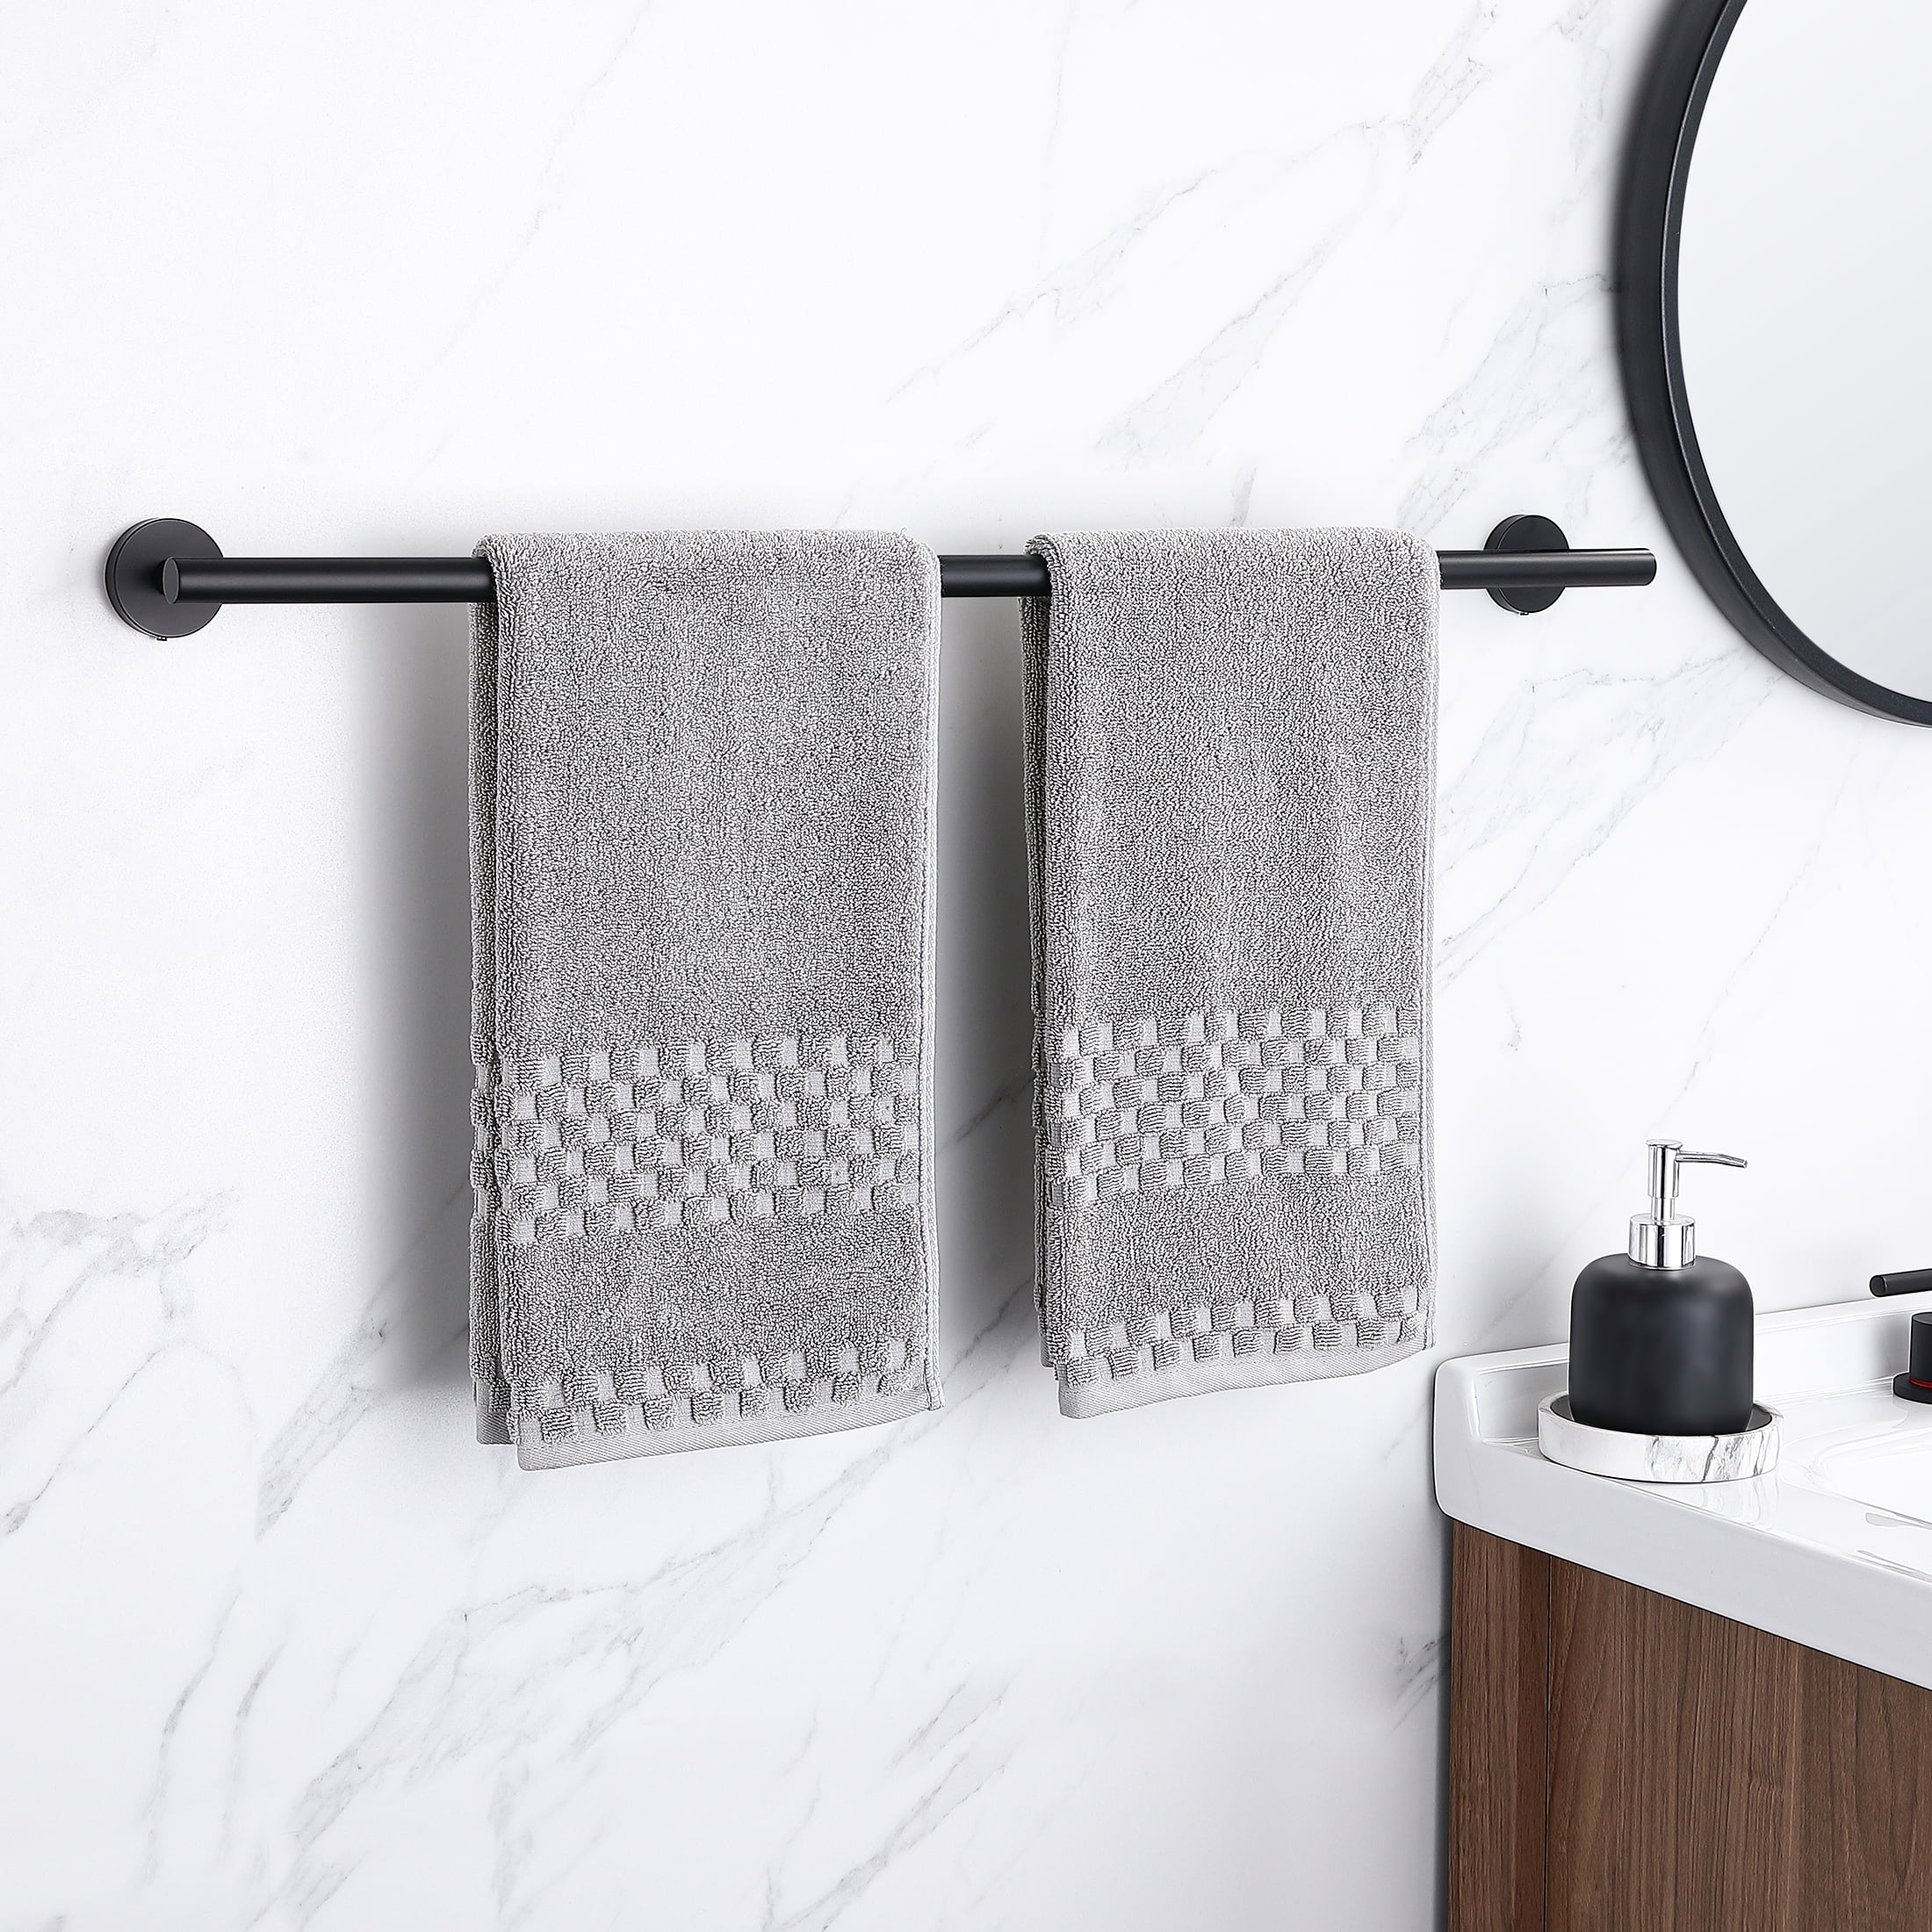 KES 30 Inches Matte Black Bathroom Towel Bar Shower Hand Towel Holder Hanger SUS304 Stainless Steel RUSTPROOF Wall Mount No Drill A2000S75DG-BK